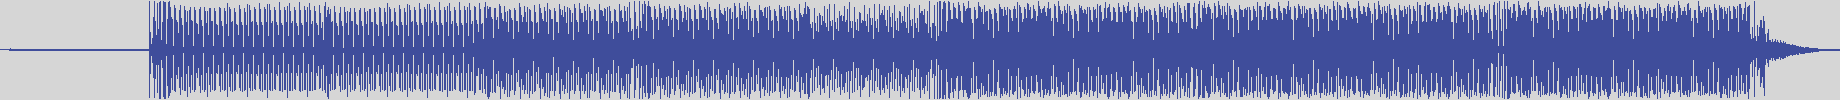 nf_boyz_records [NFY041] Insane Surge - Wireless Crescent [Original Mix] audio wave form